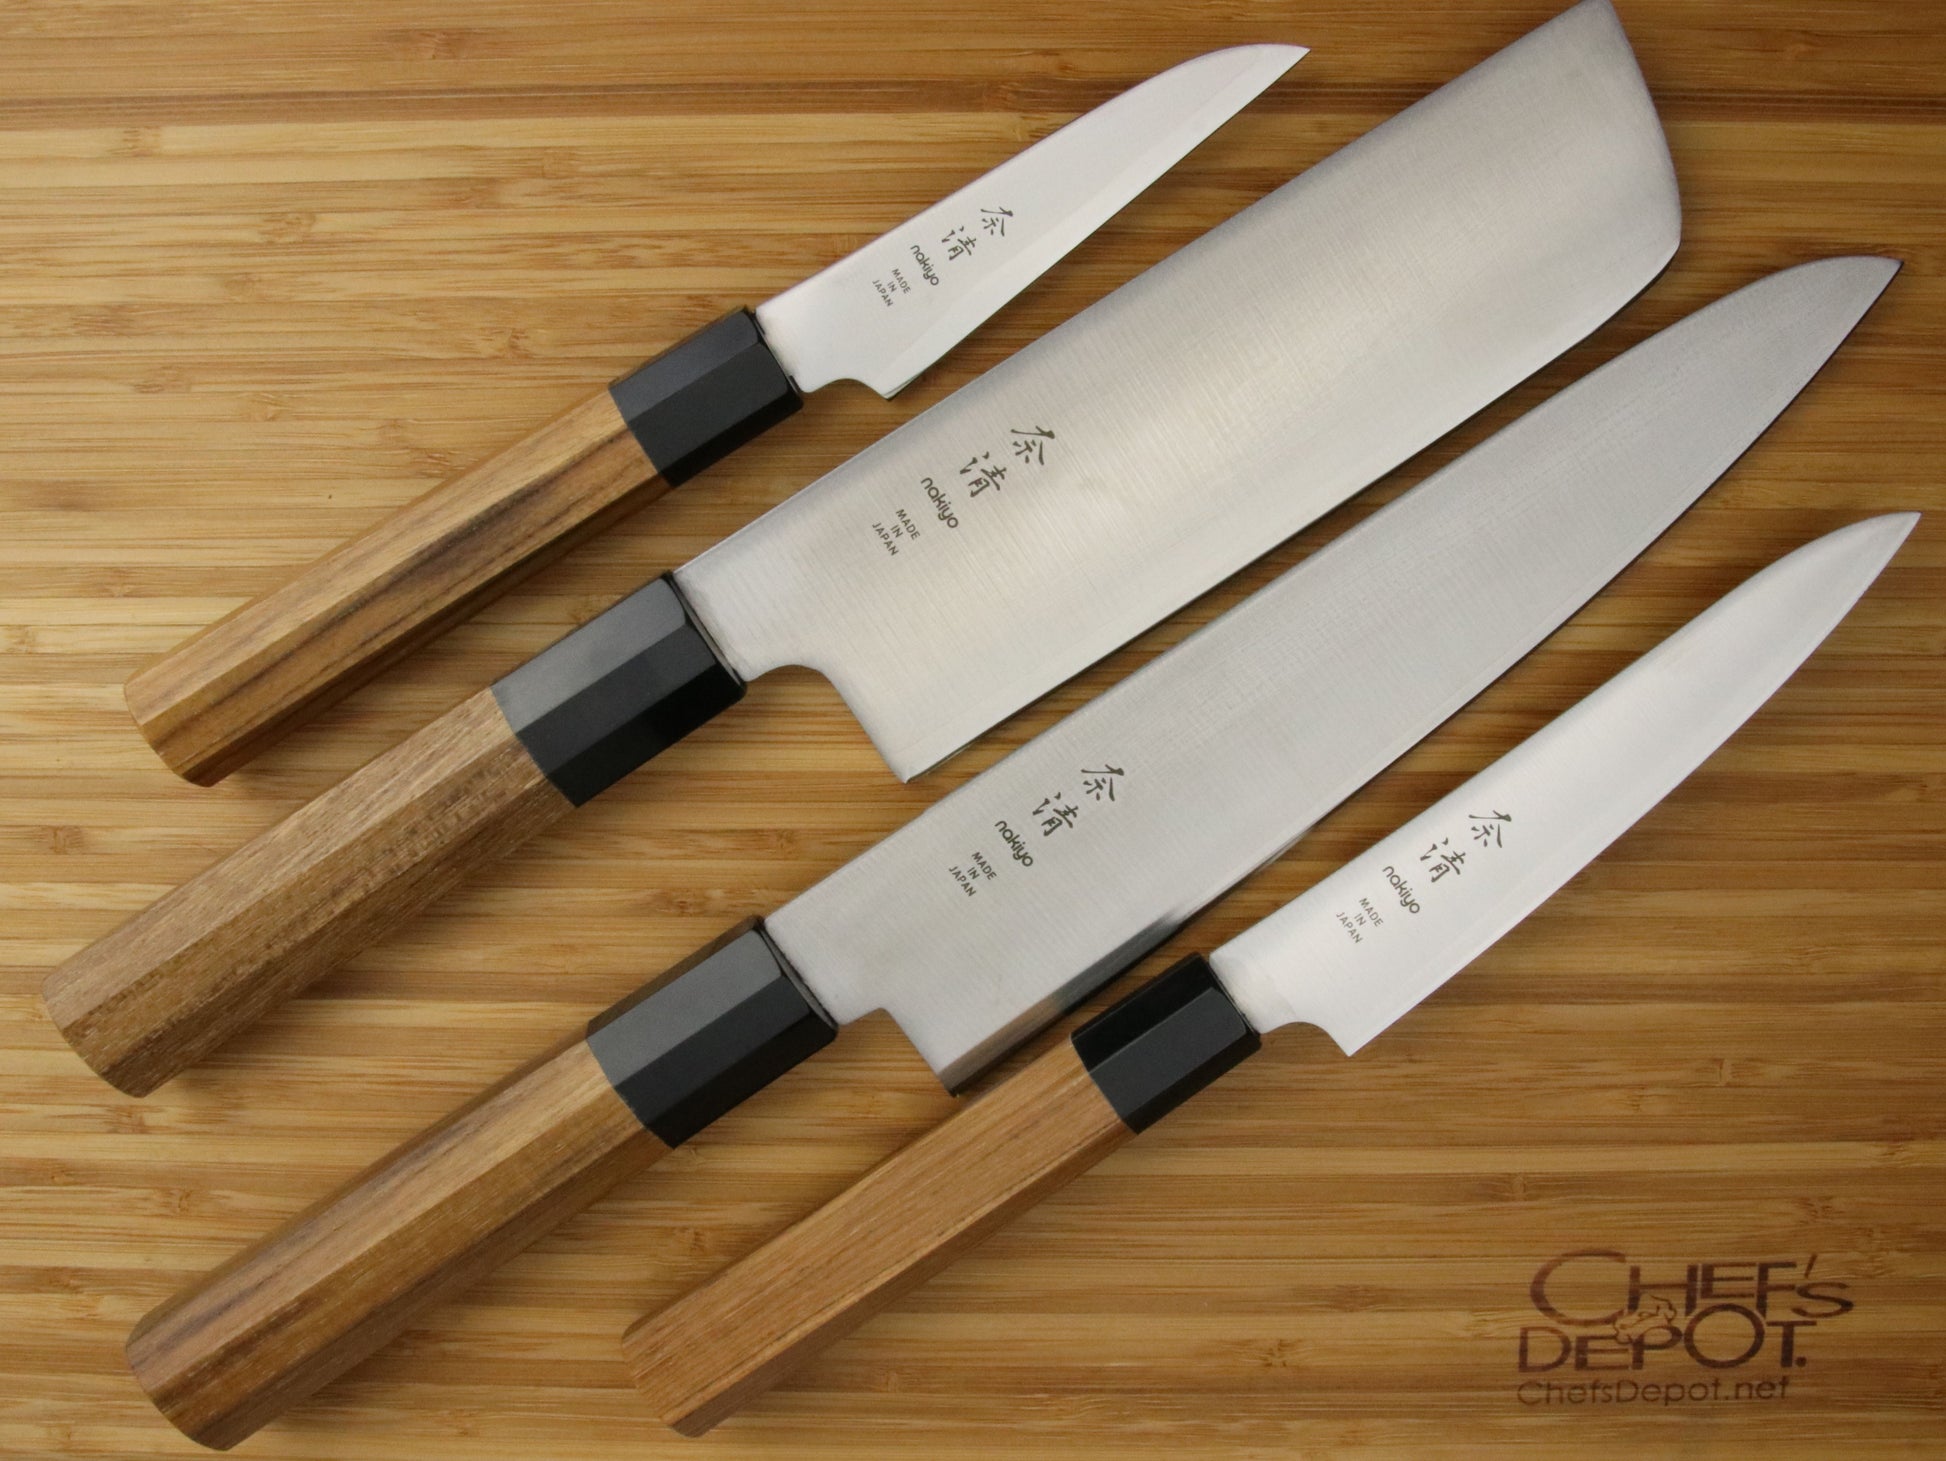 Nakiyo Teak San Mai 9 Gyuto/Chef – Seattle Cutlery